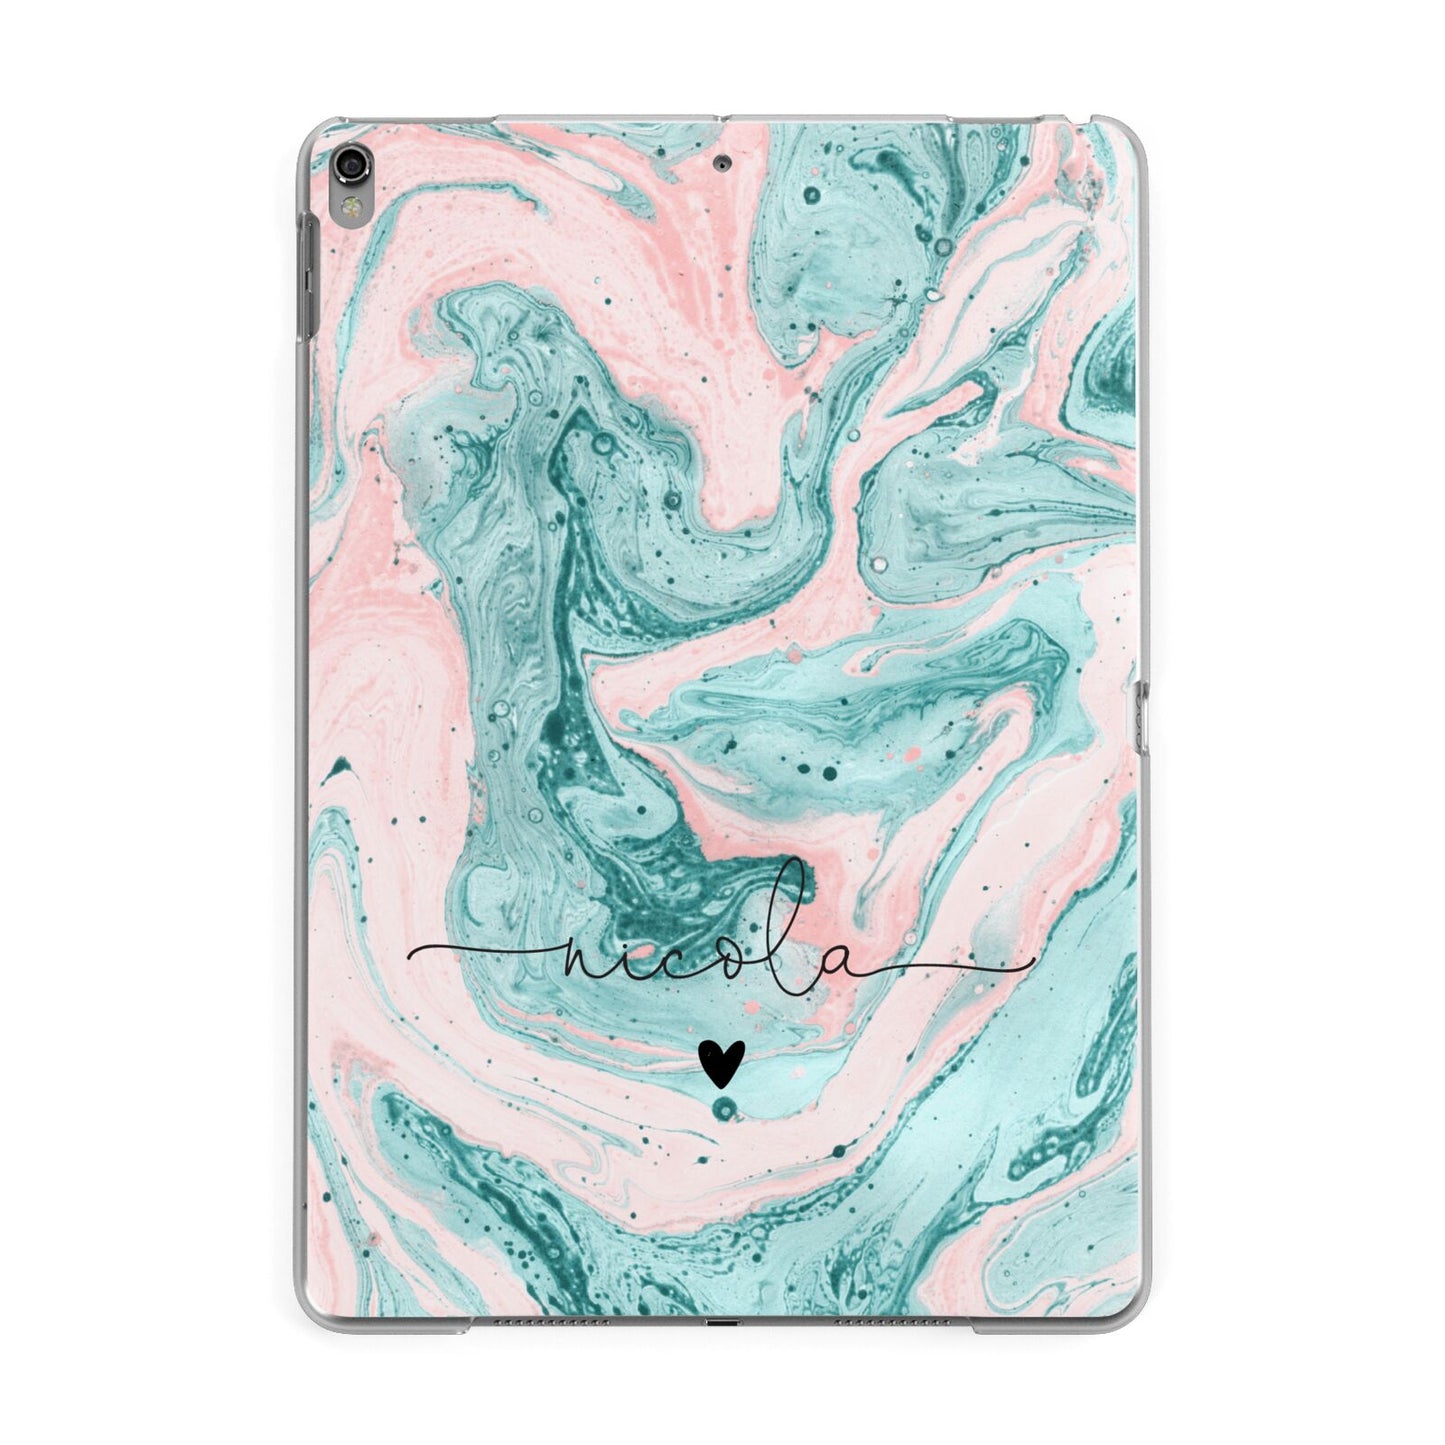 Personalised Name Green Swirl Marble Apple iPad Grey Case